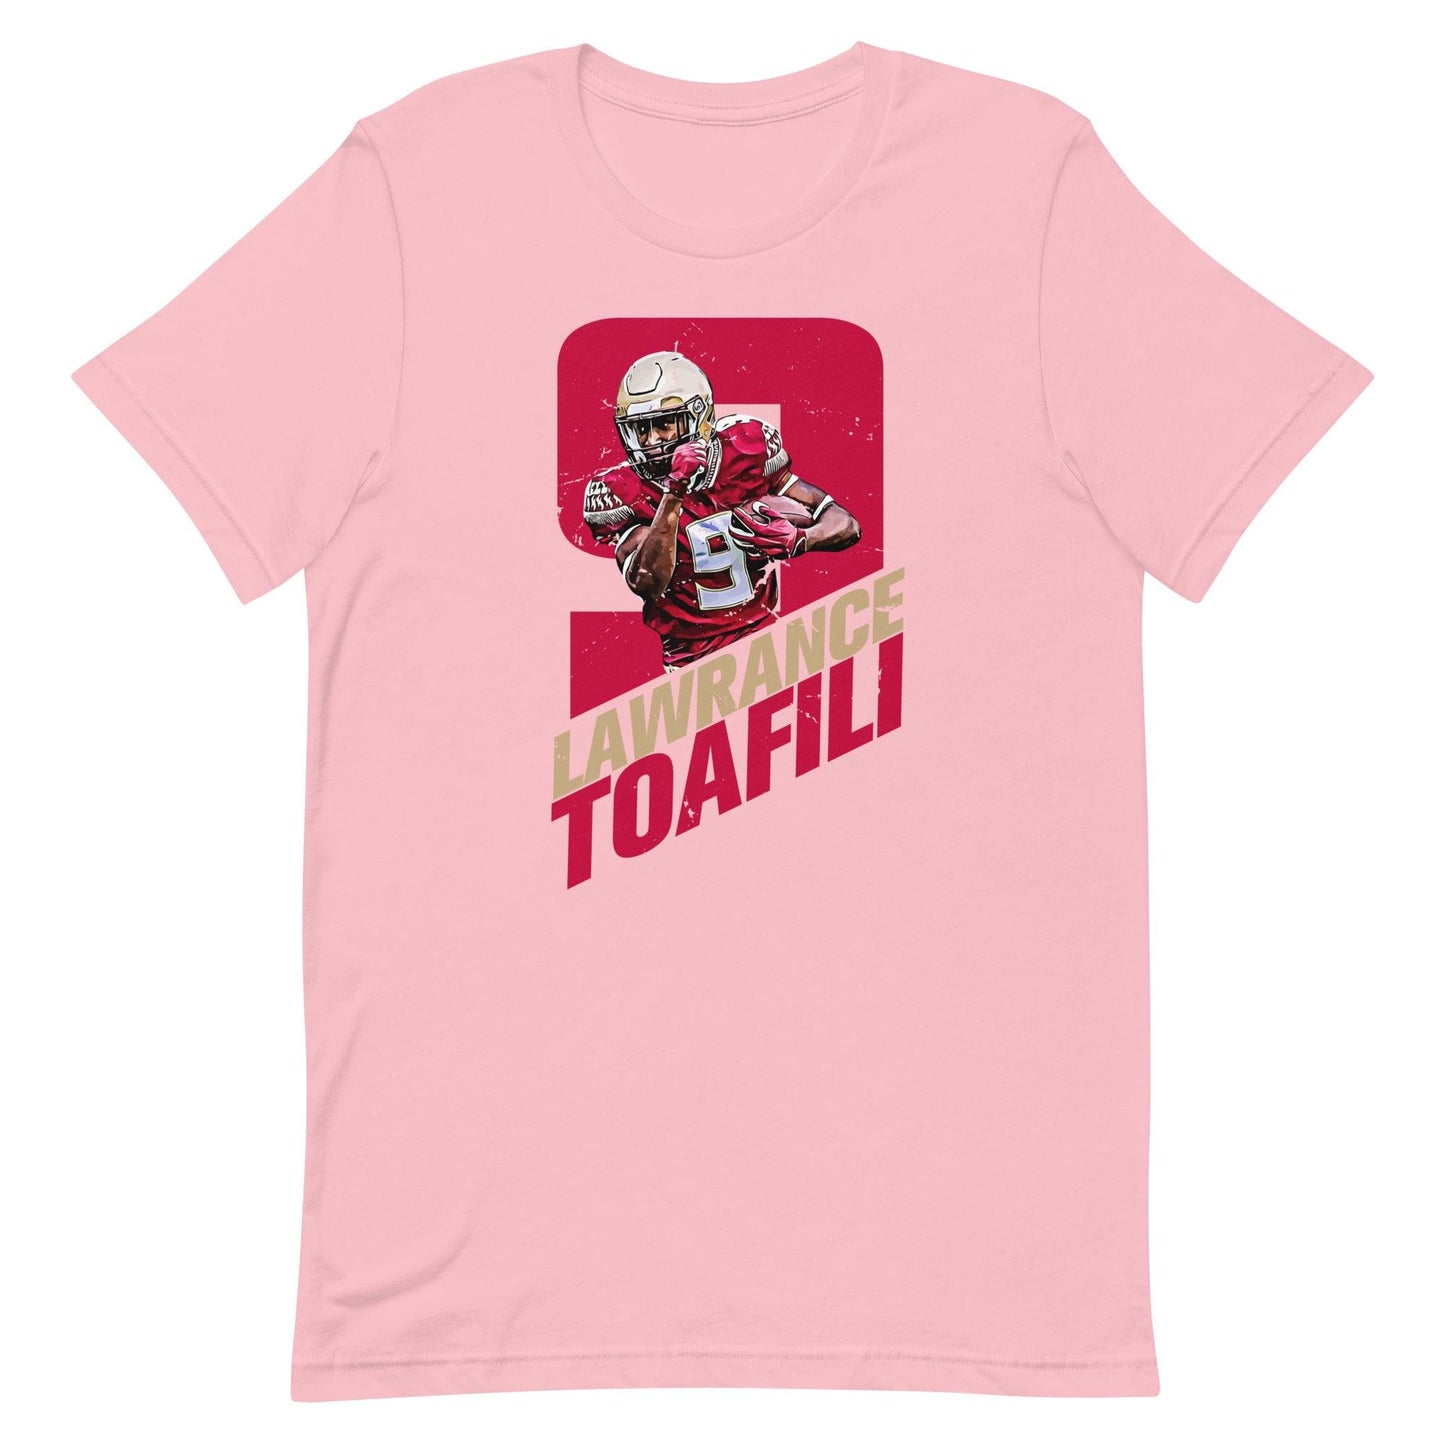 Lawrance Toafili "Run It" t-shirt - Fan Arch